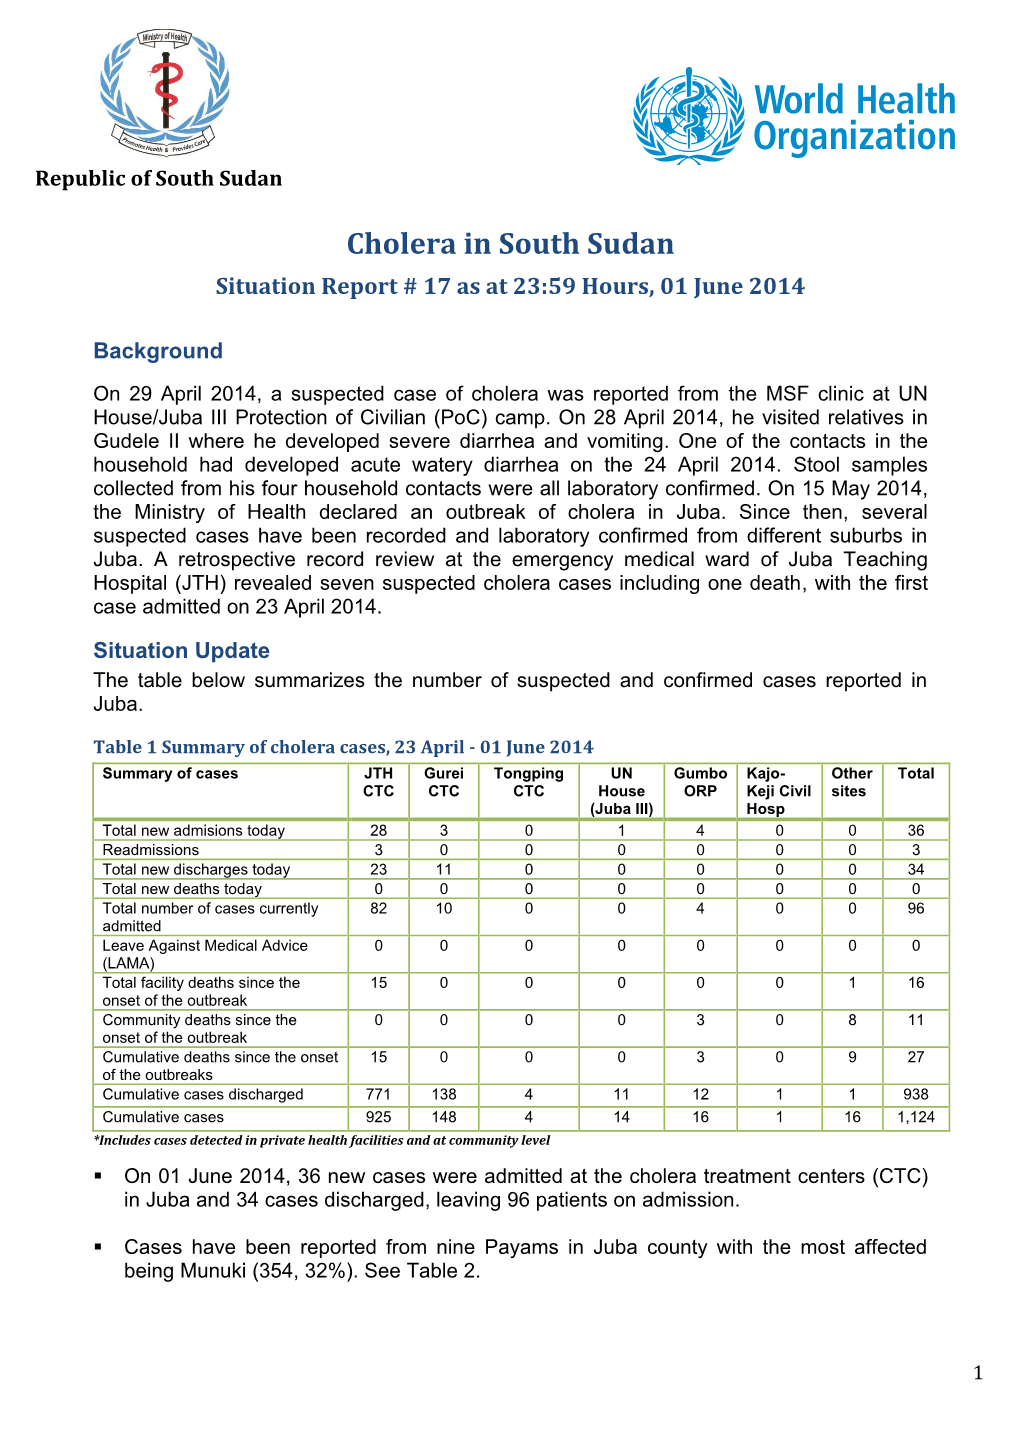 Cholera in South Sudan Situation Report # 17 As at 23:59 Hours, 01 June 2014